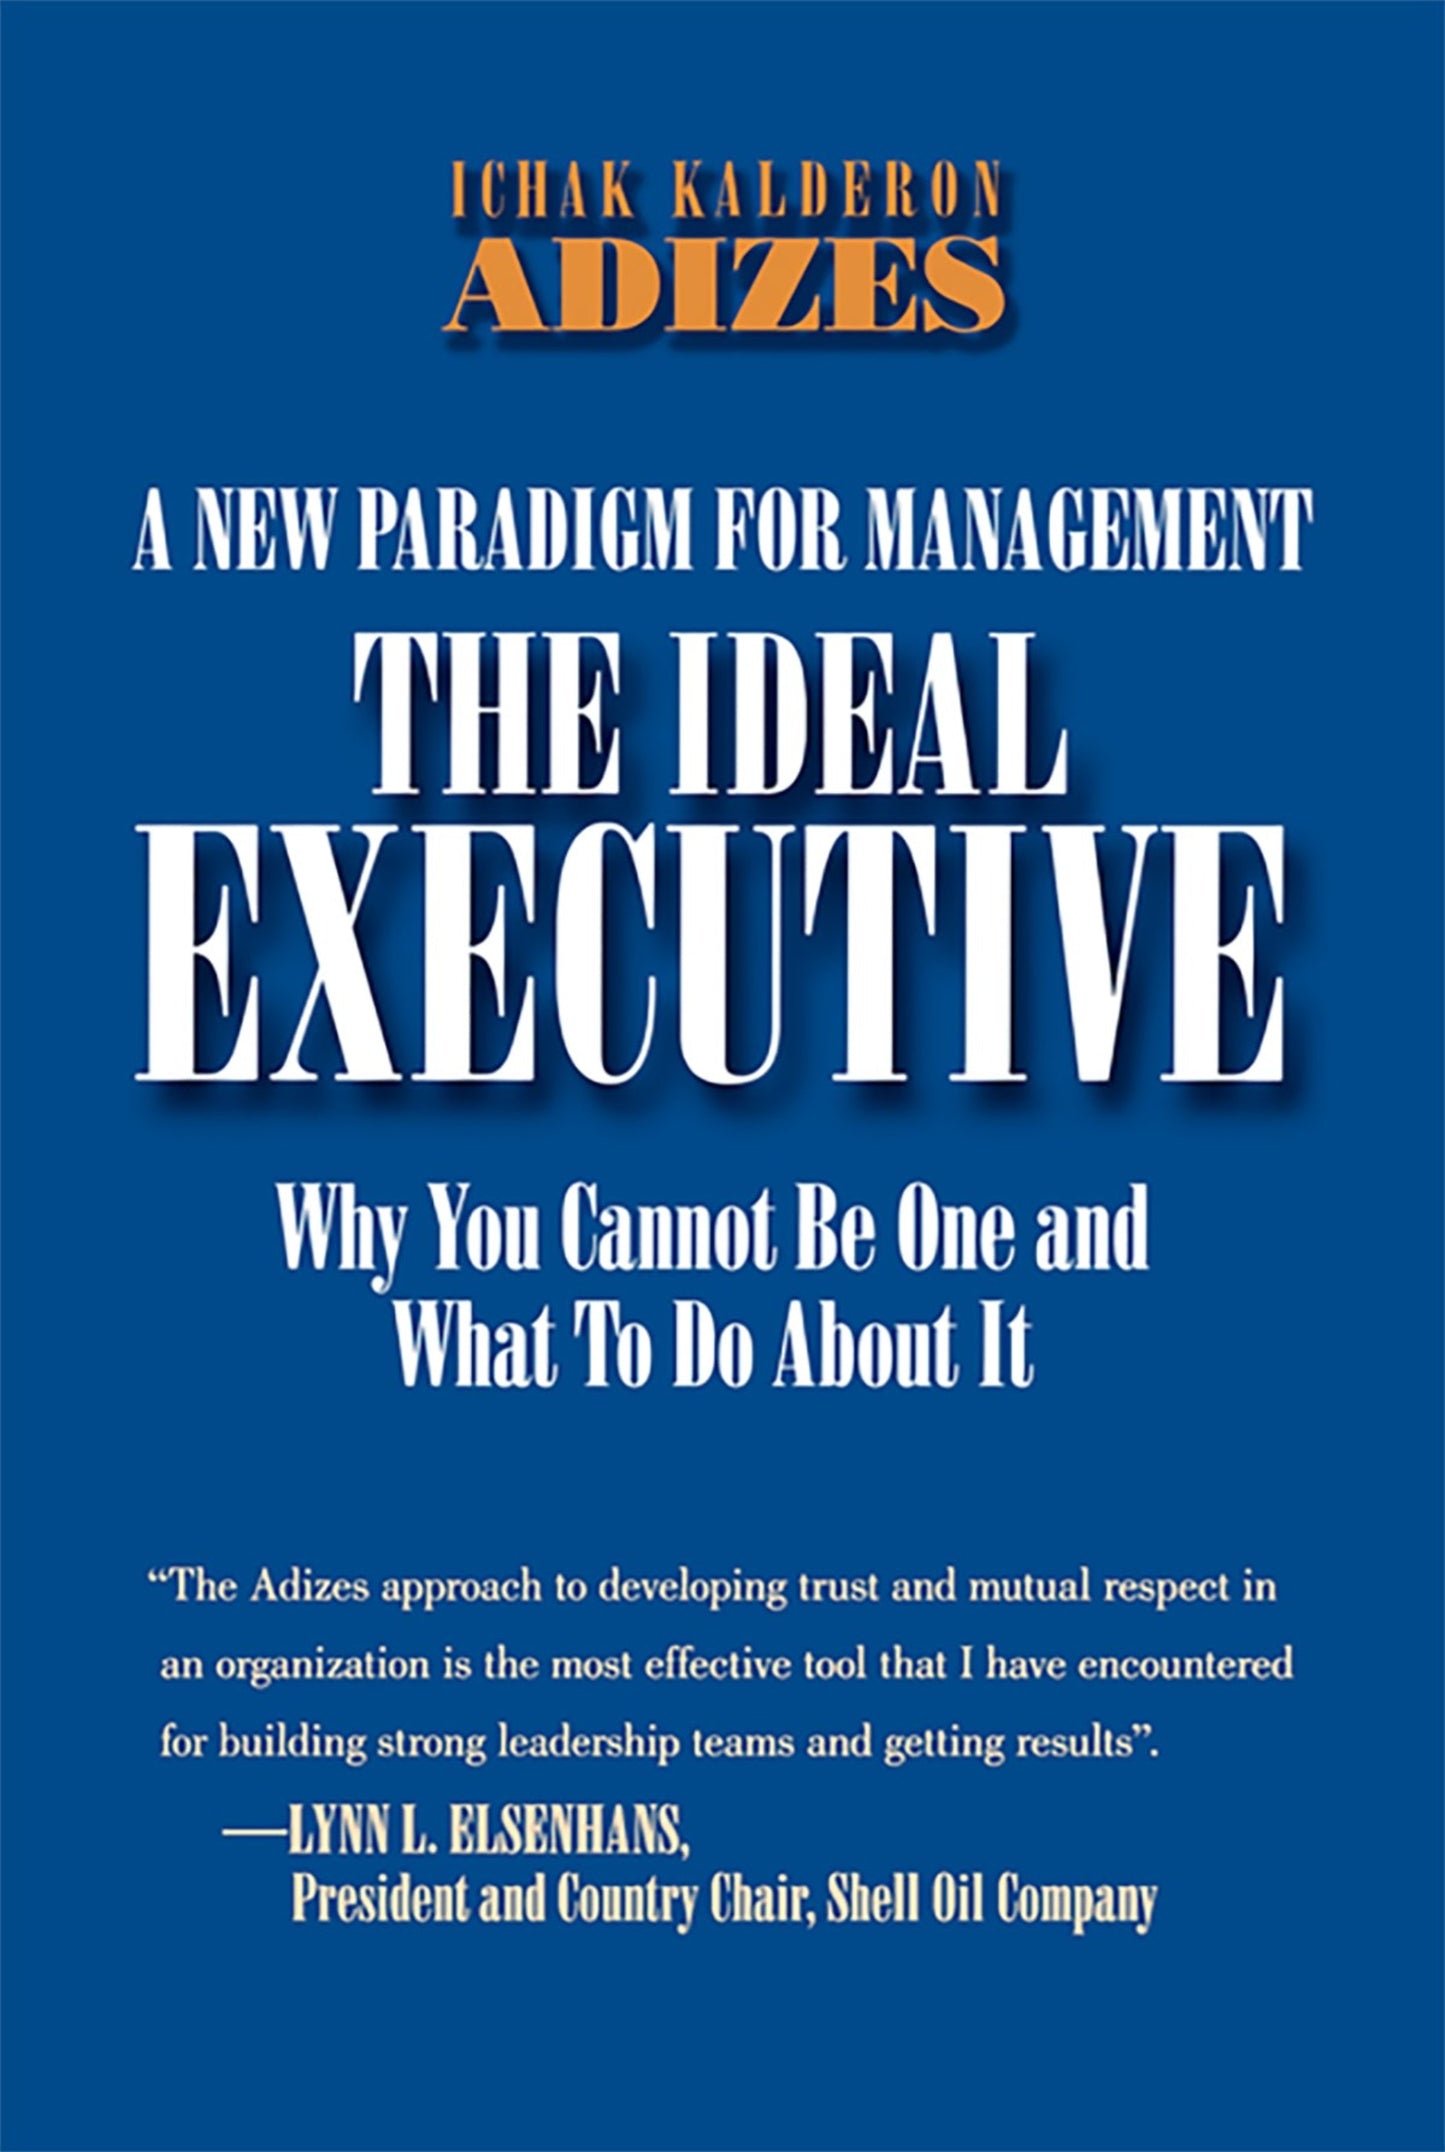 The Ideal Executive (English)